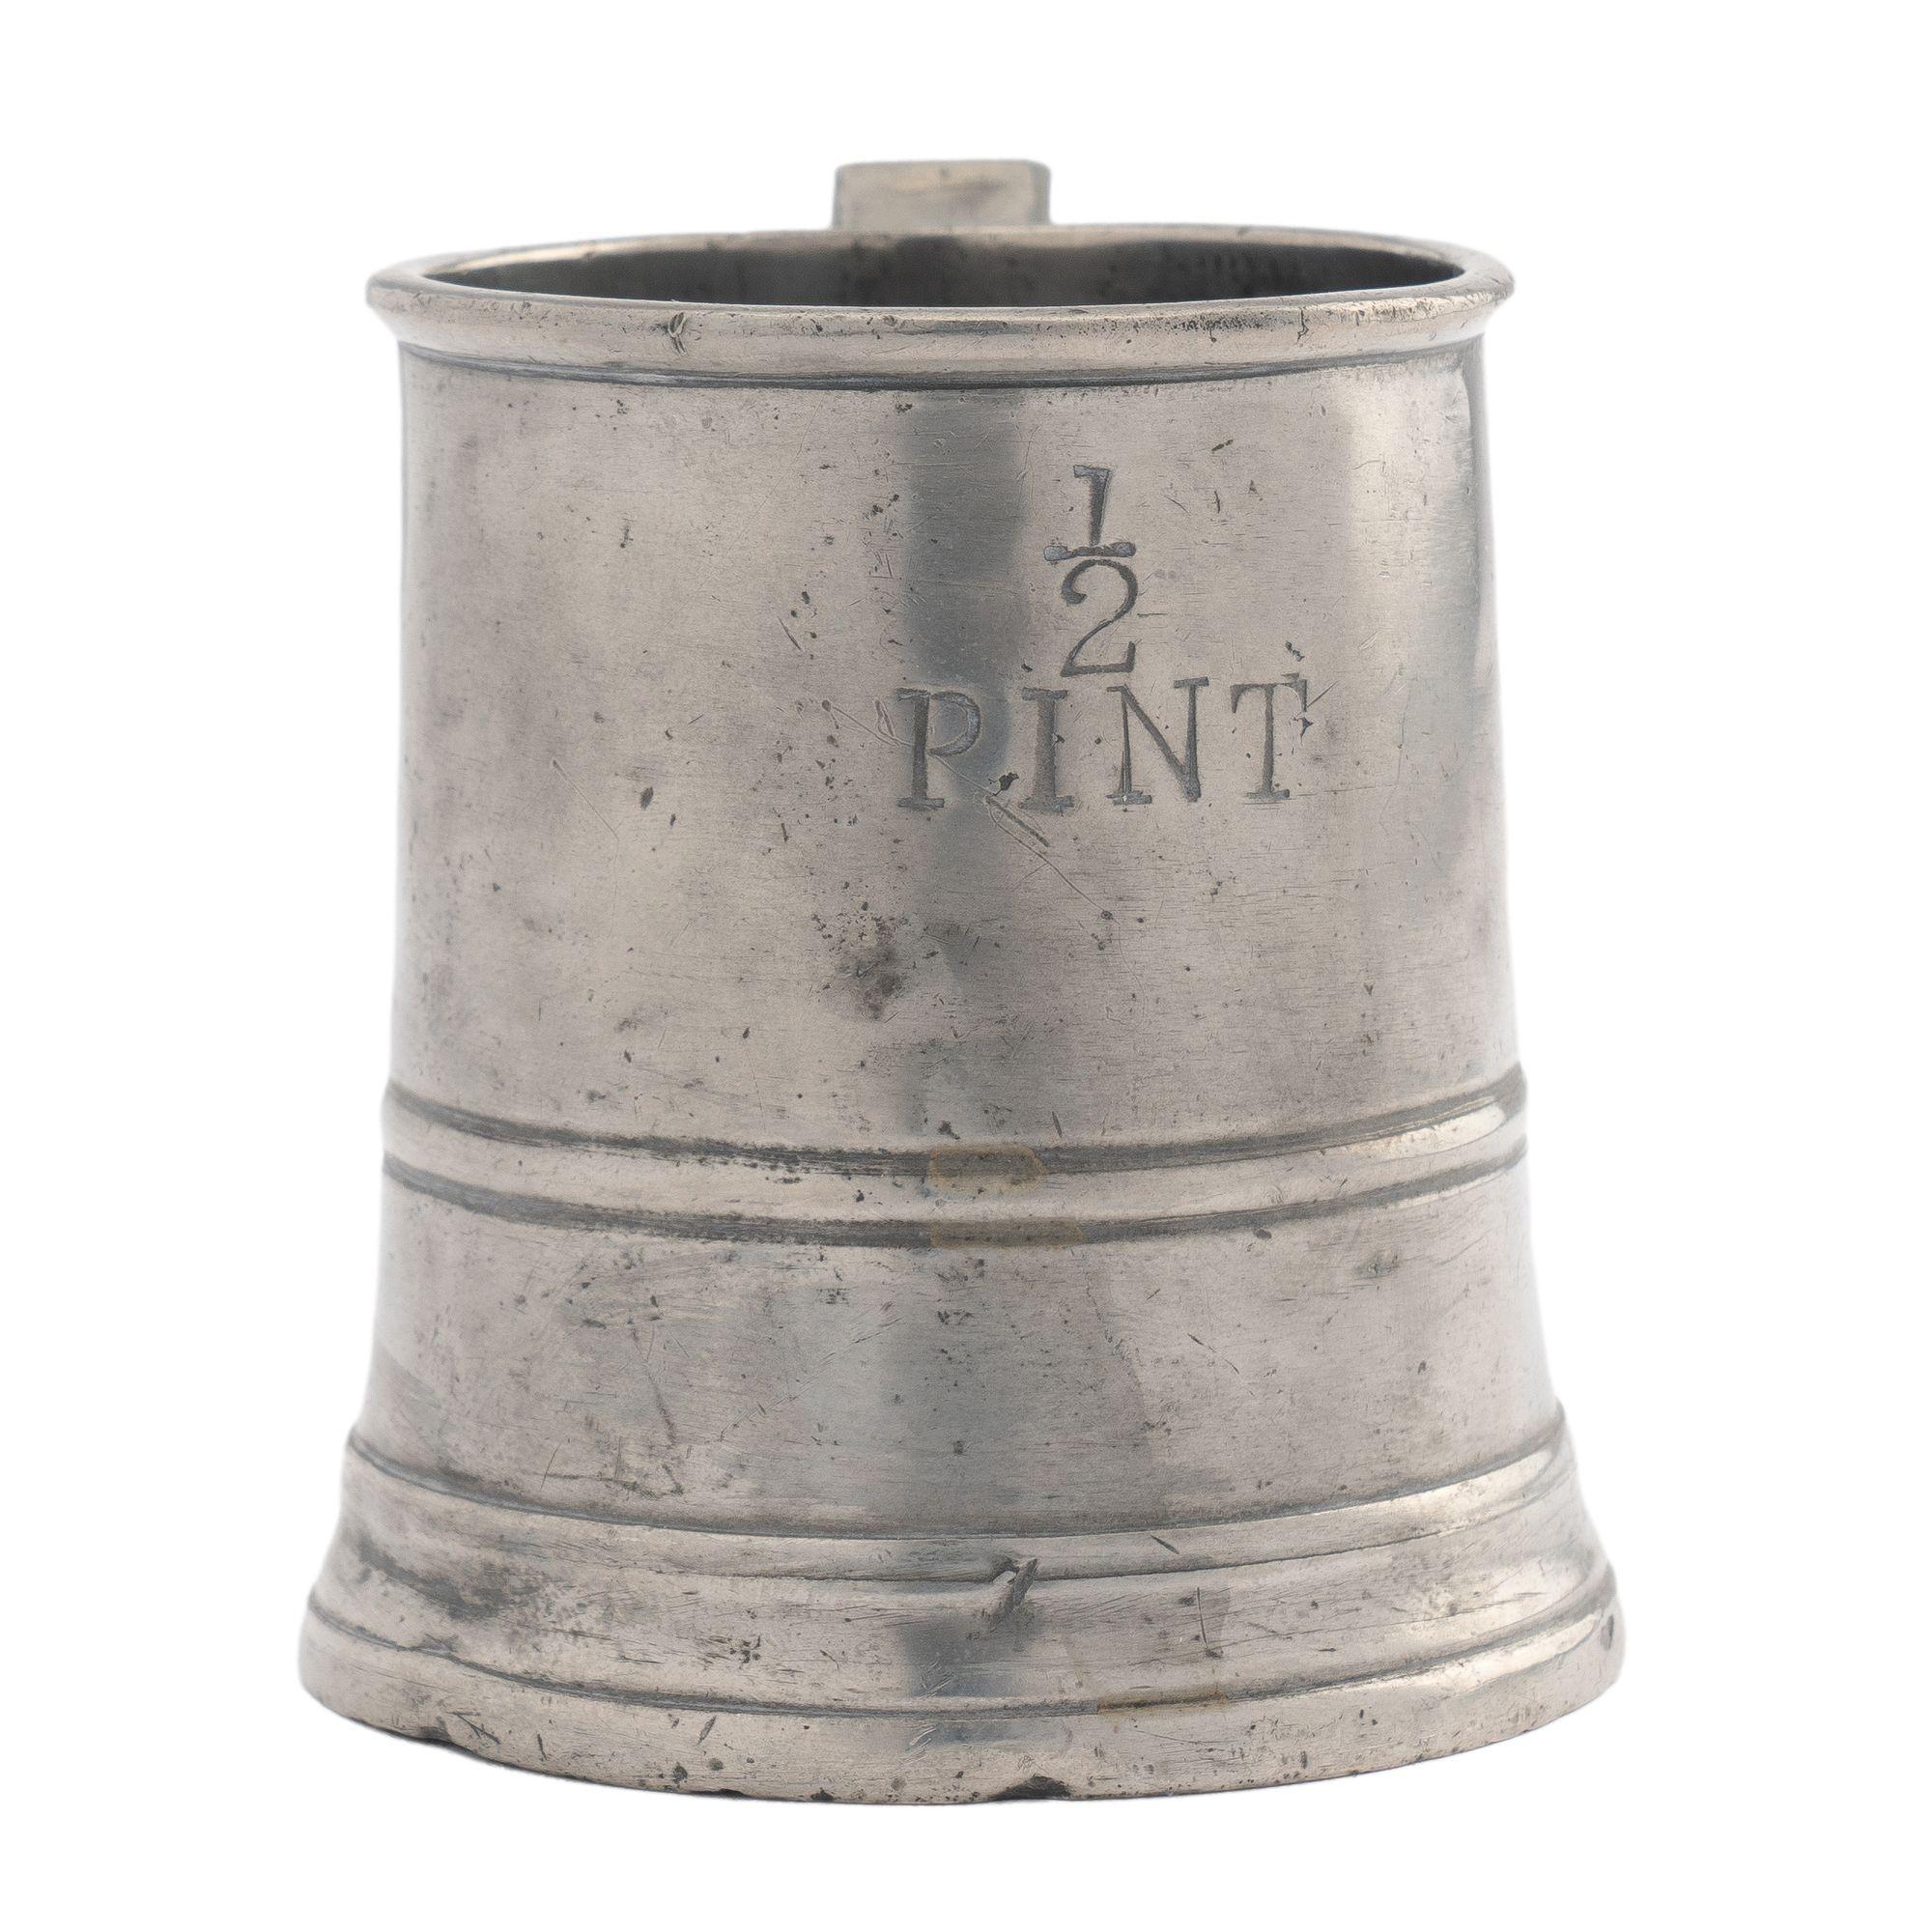 English pewter Half Pint mug, c. 1800's For Sale 2